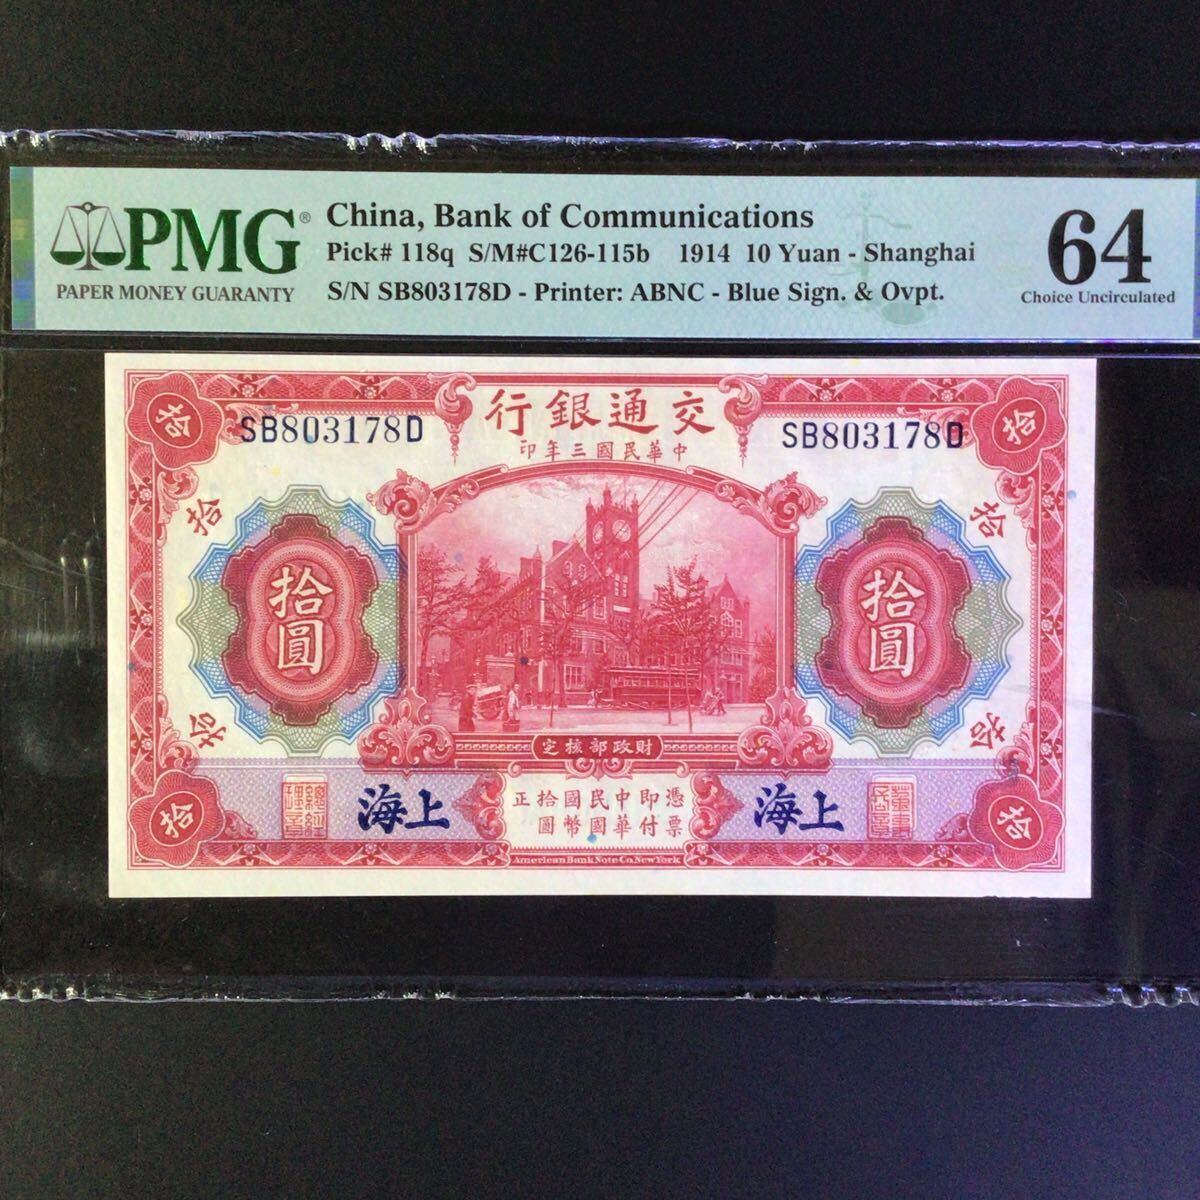 World Banknote Grading CHINA《Bank of Communications》 10 Yuan【1914】〔Shanghai〕『PMG Grading Choice Uncirculated 64』...._画像1